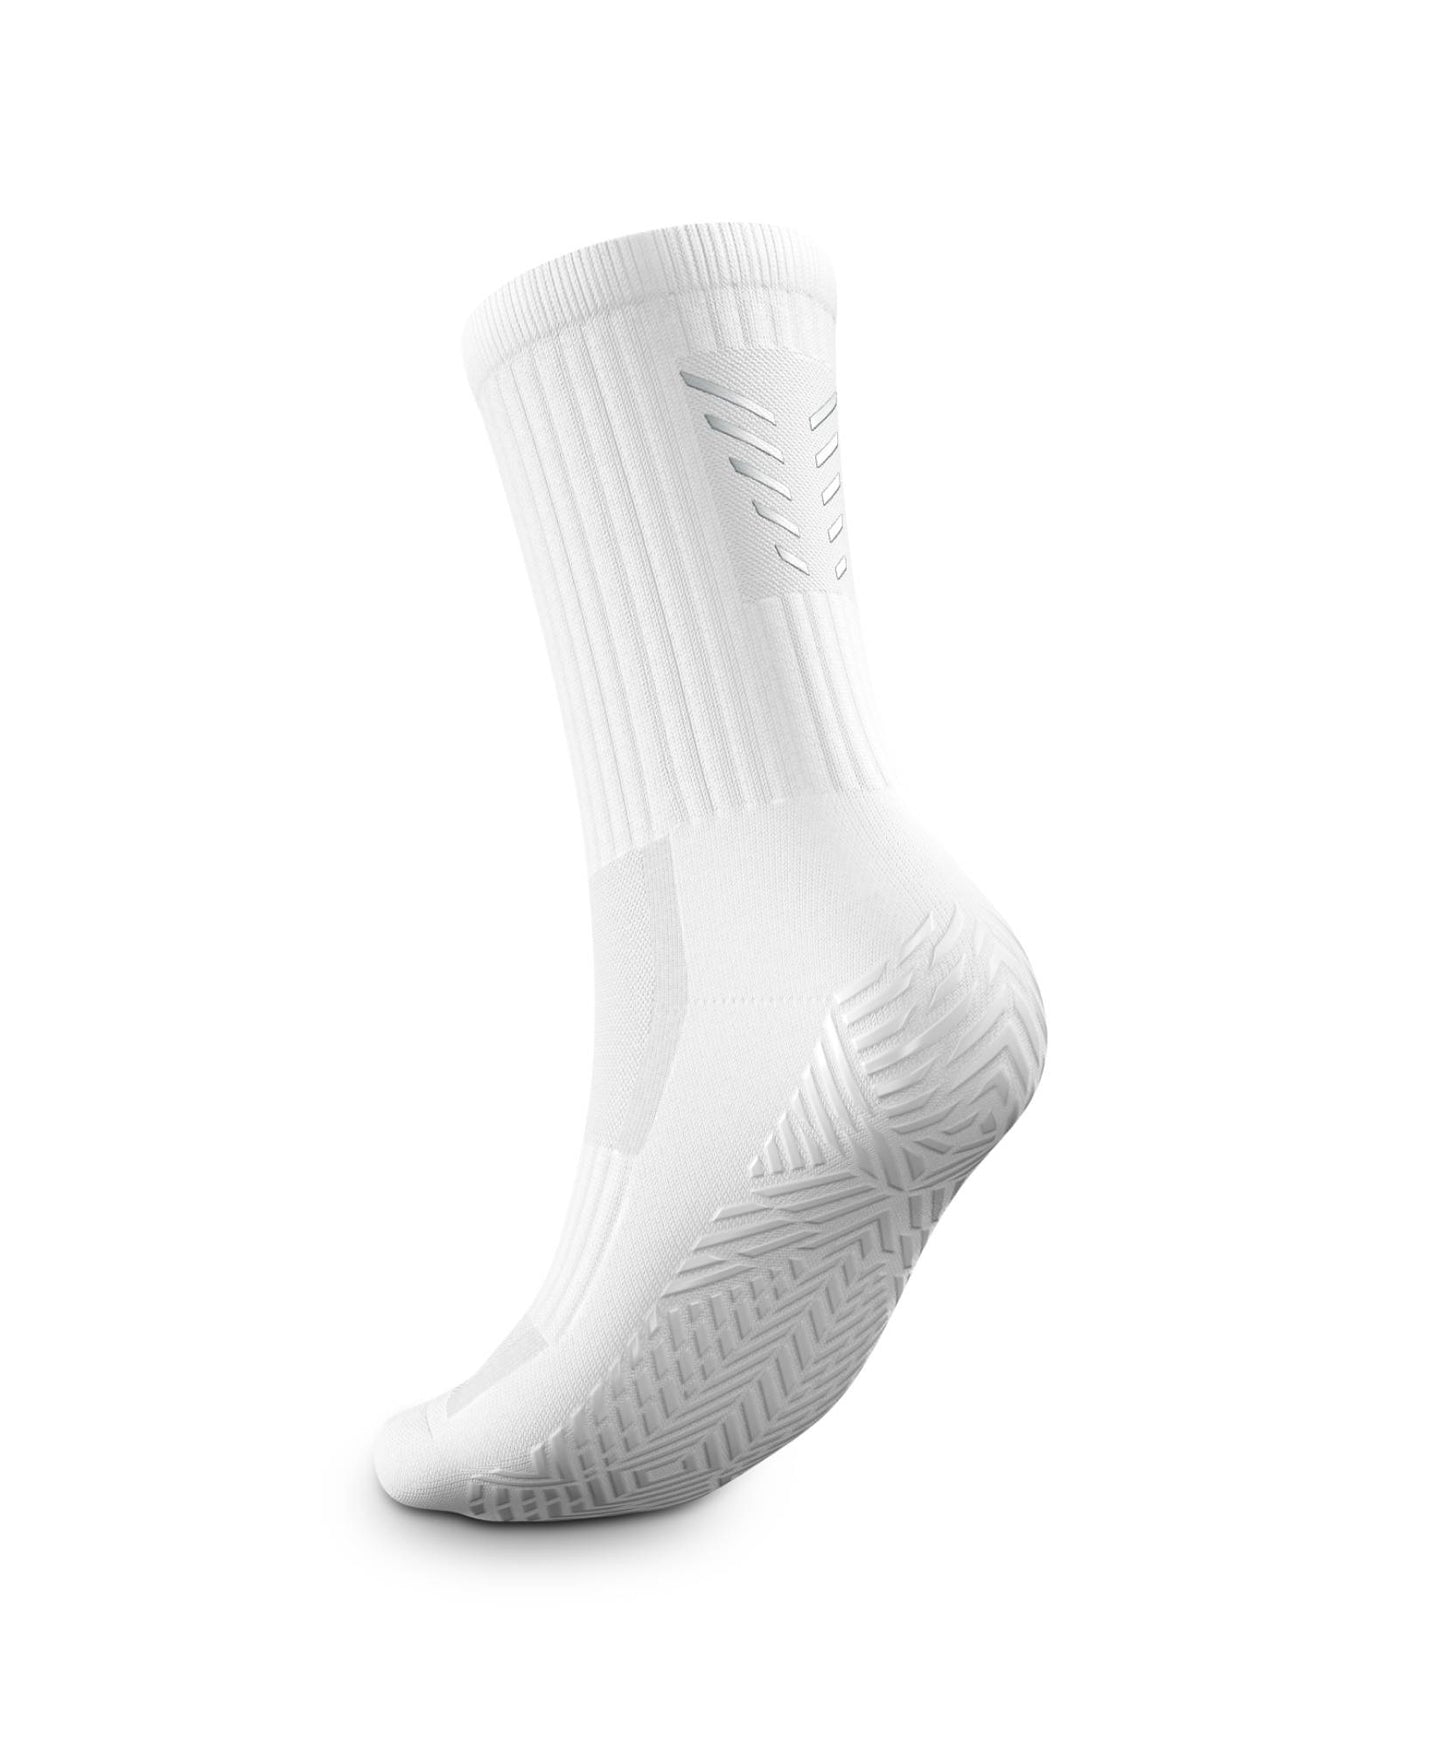 Reflective Mid-Calf Football Grip Socks